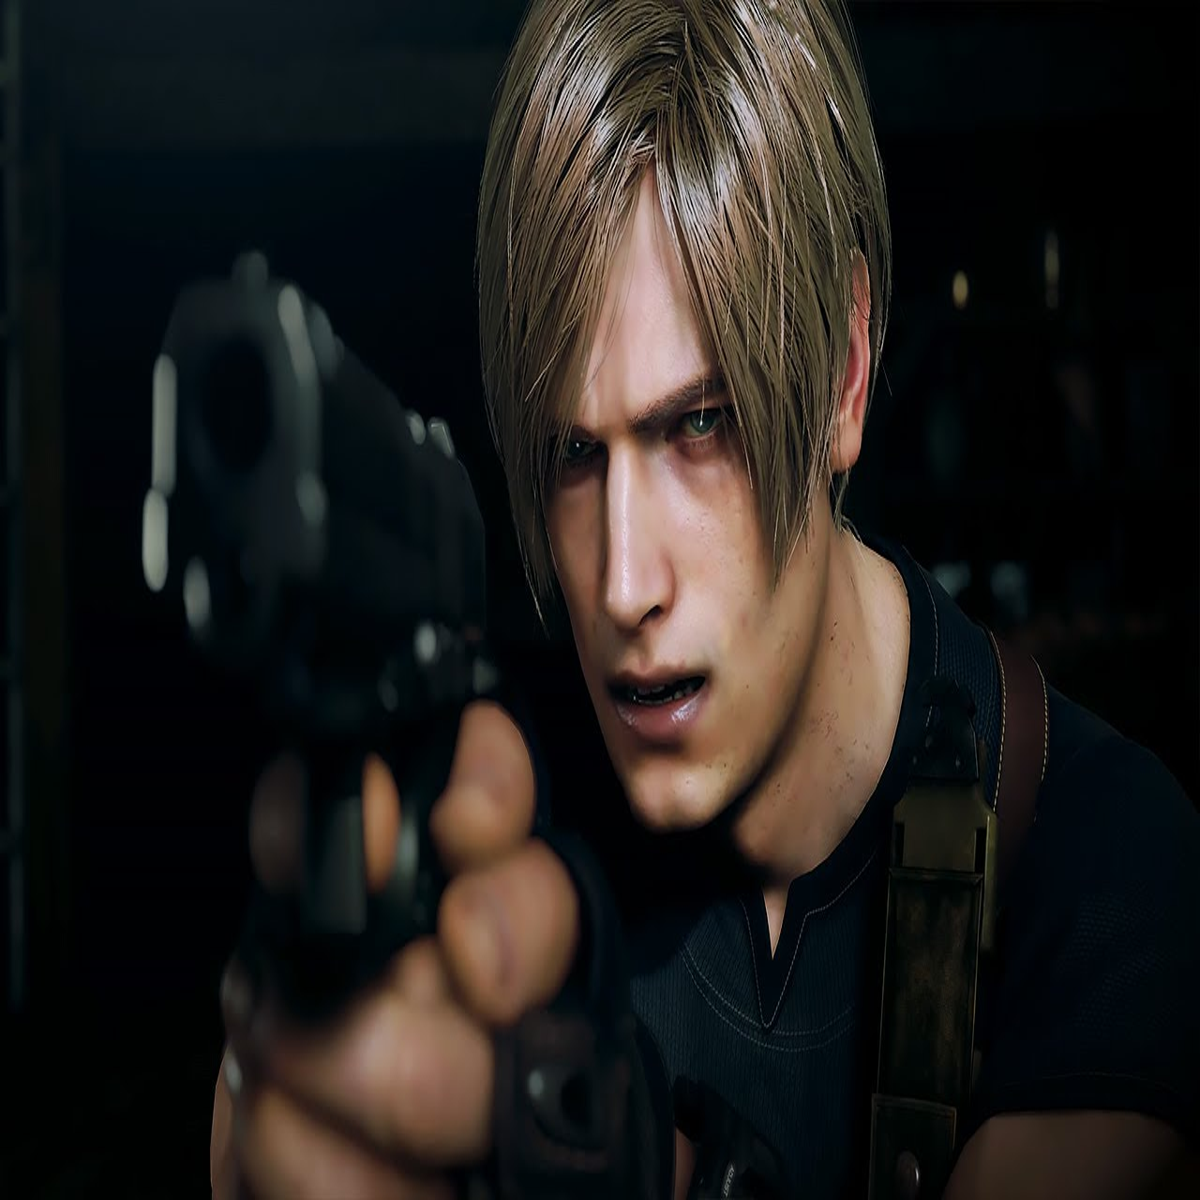 Revista Resident Evil Remake